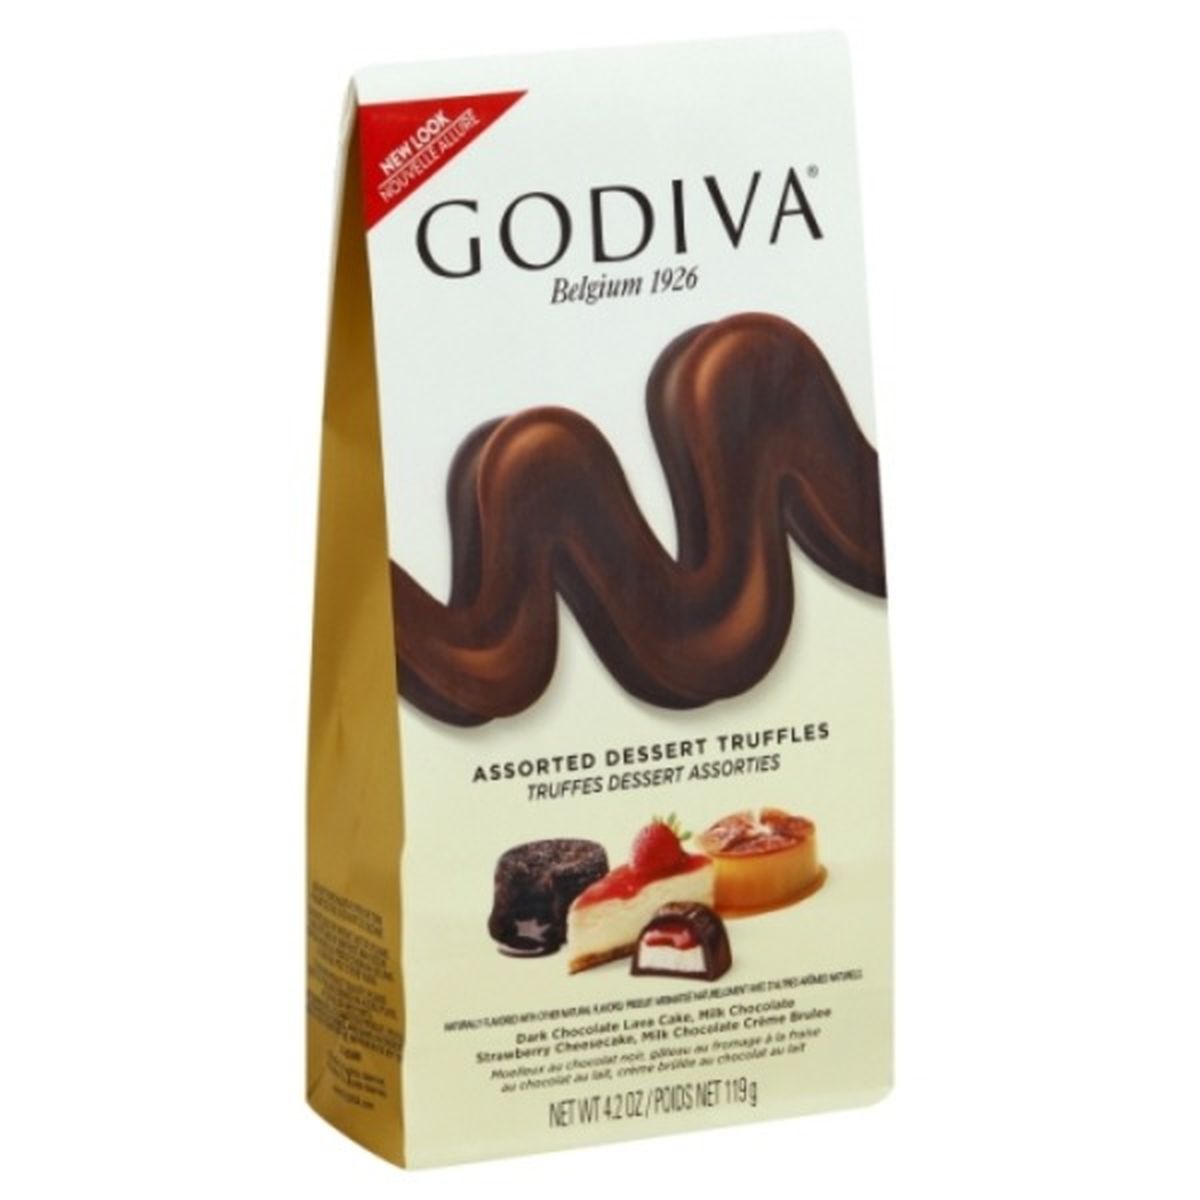 Calories in Godiva Truffles, Assorted Dessert